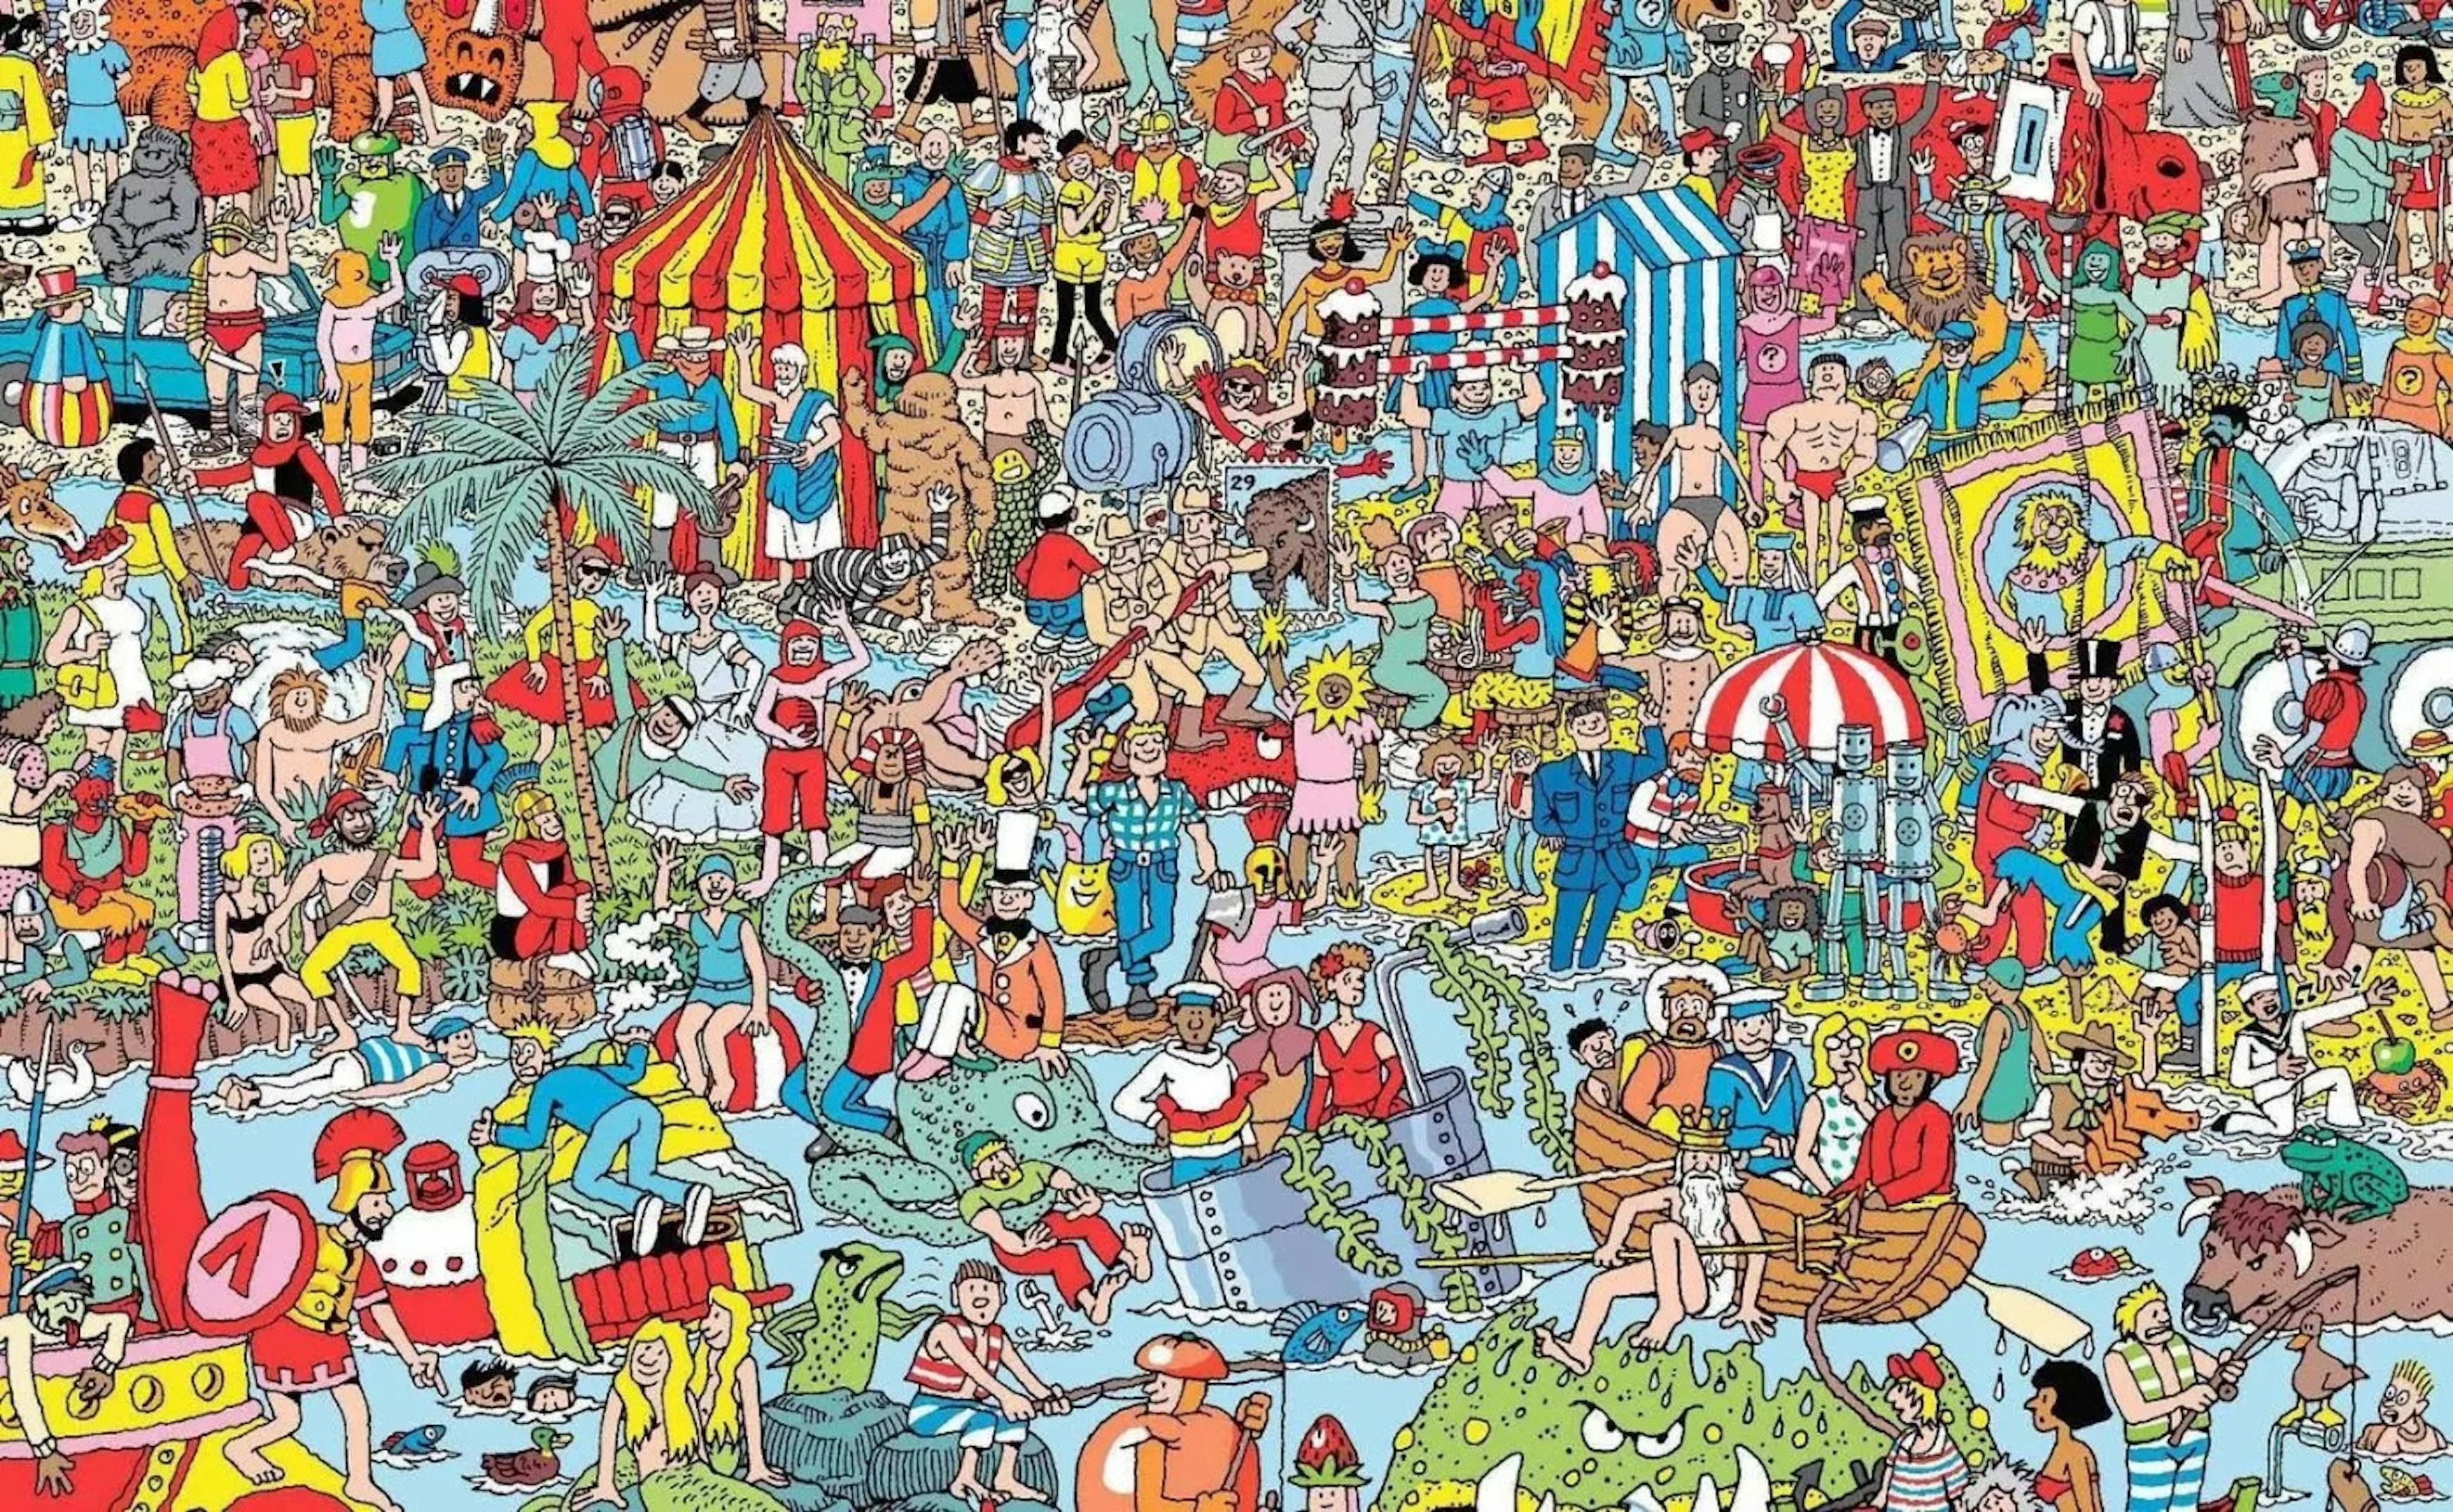 ¿Encontraste a Wally en la foto?